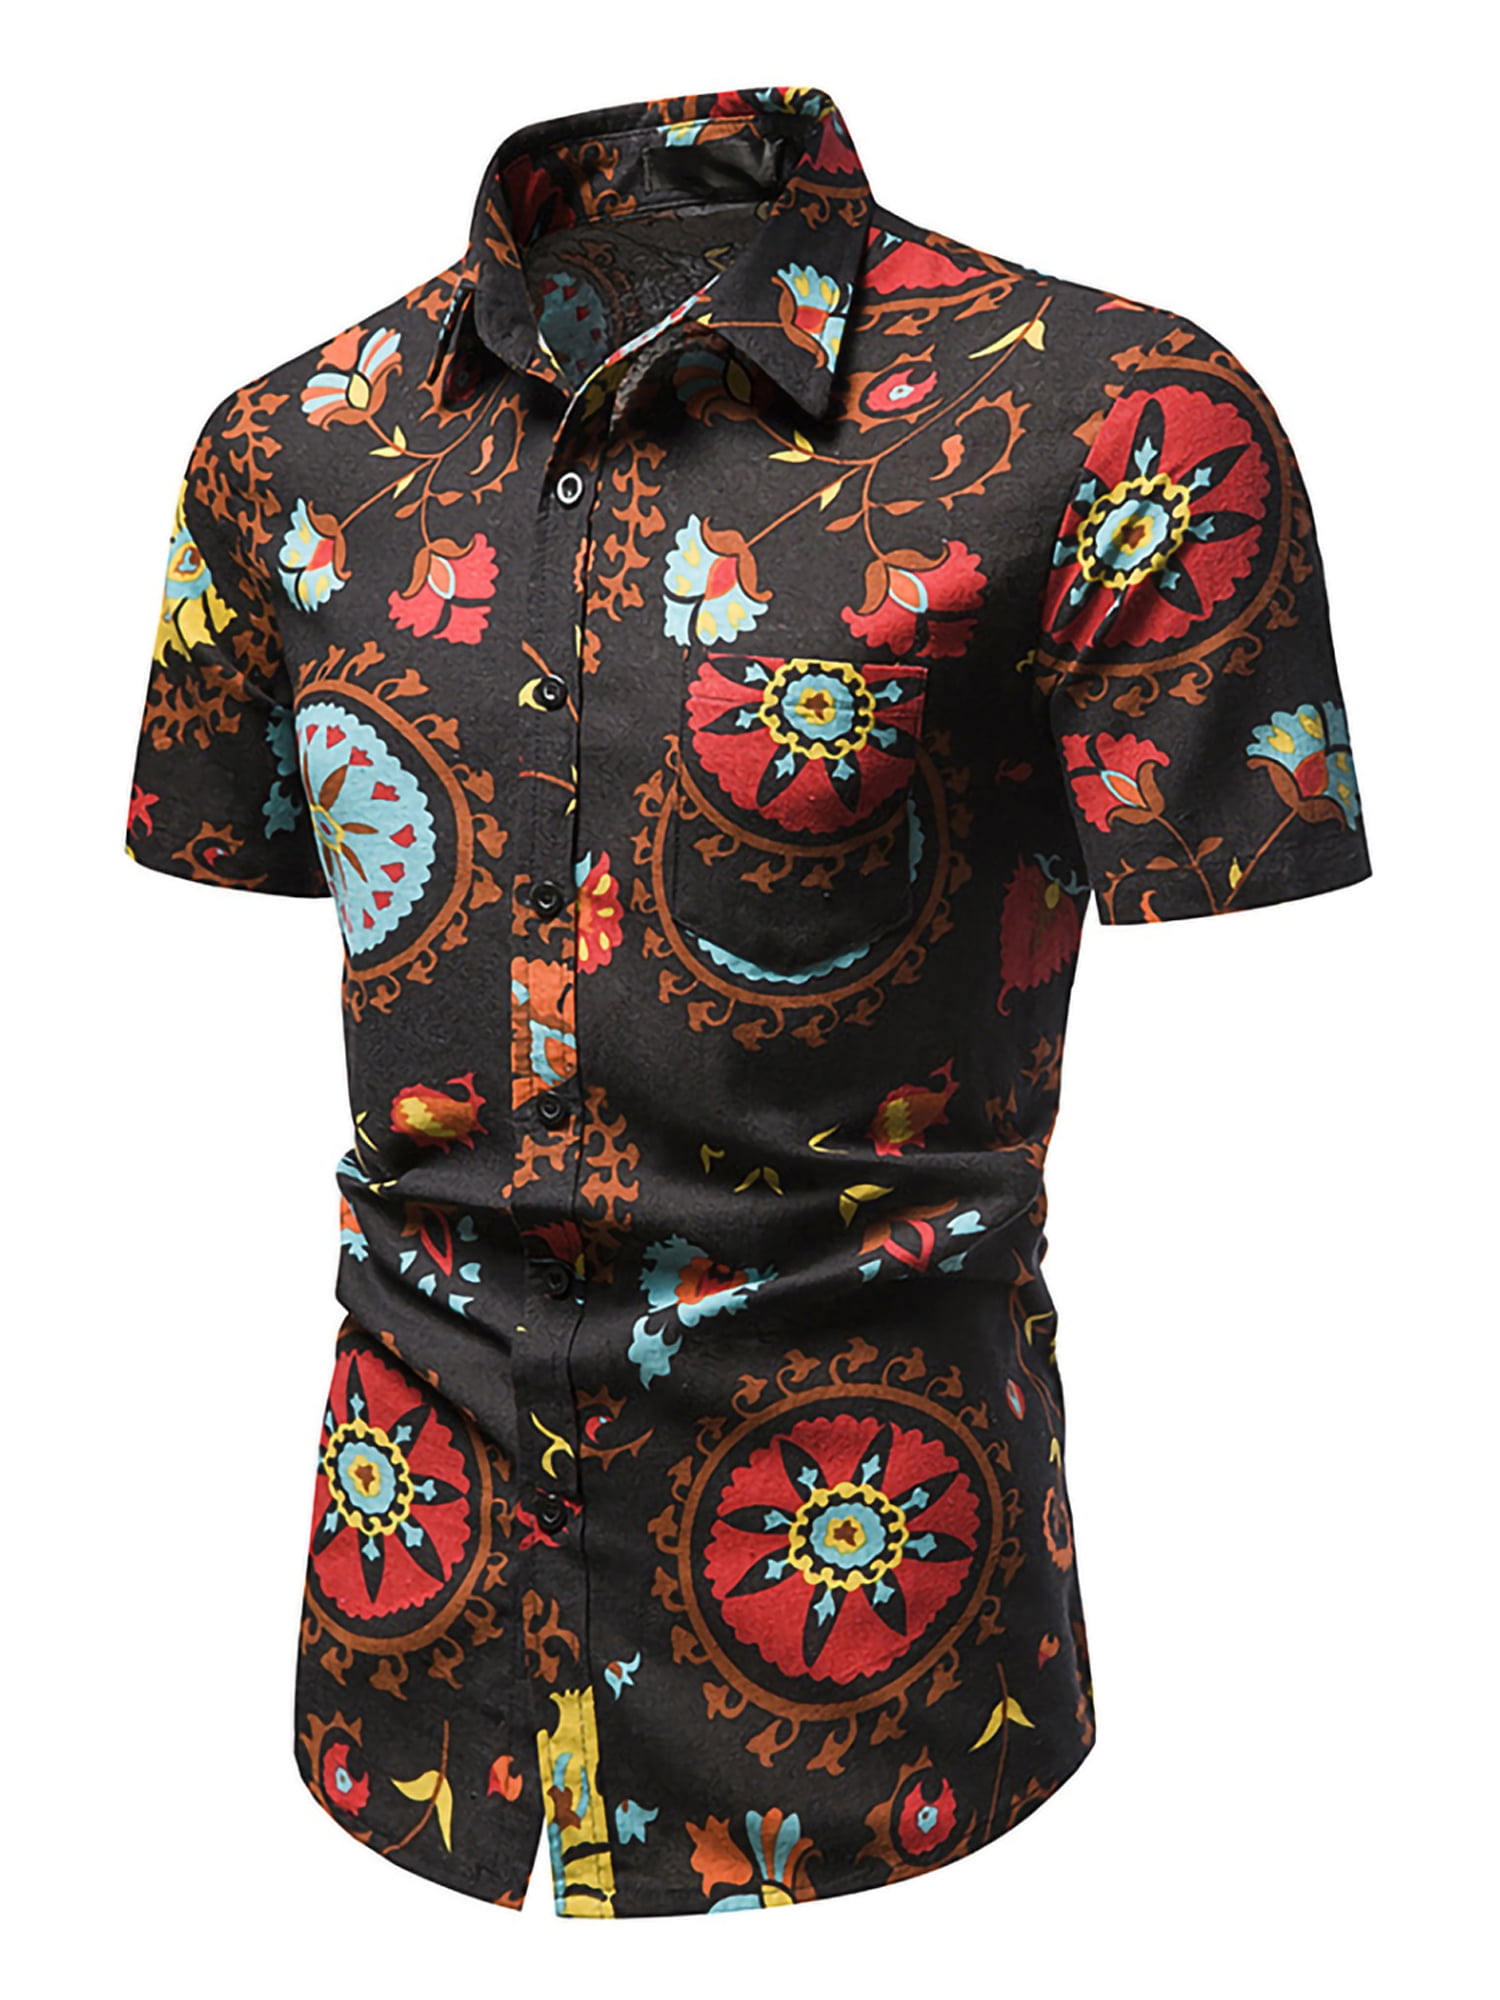 Colisha Tropical Shirts for Men Summer Short Sleeve Beach Holiday Tops ...